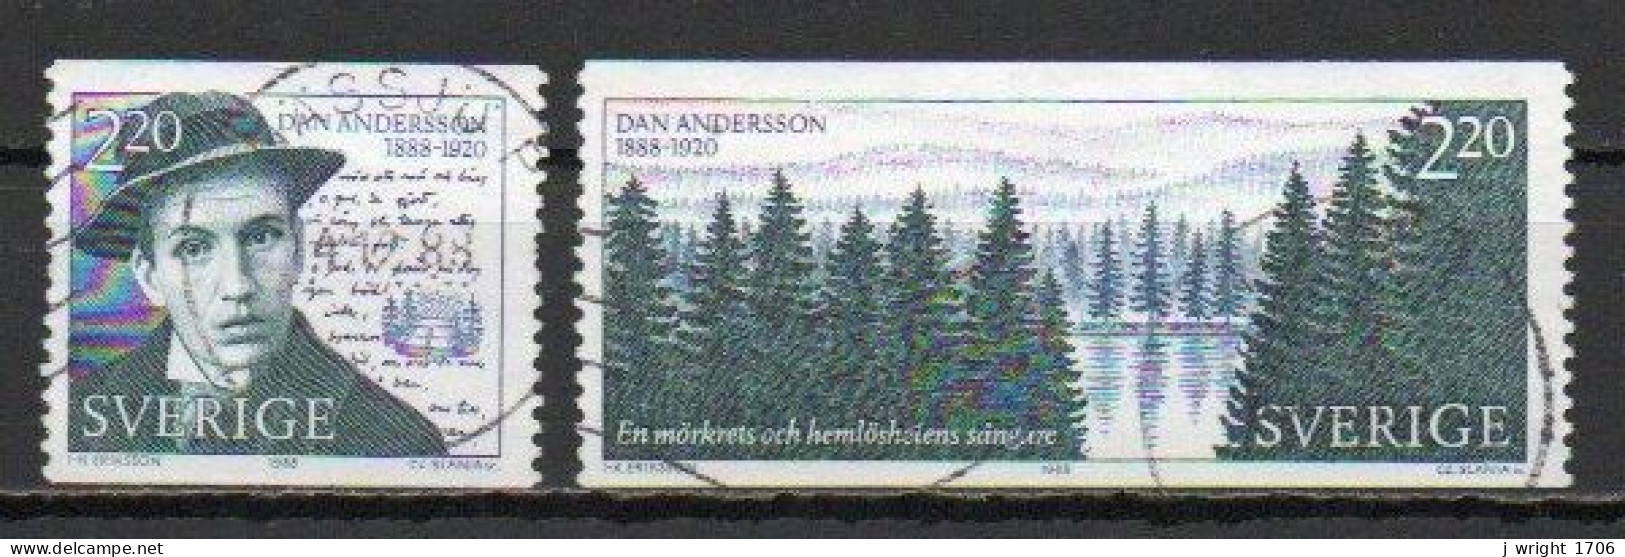 Sweden, 1988, Dan Andersson, Set, USED - Oblitérés